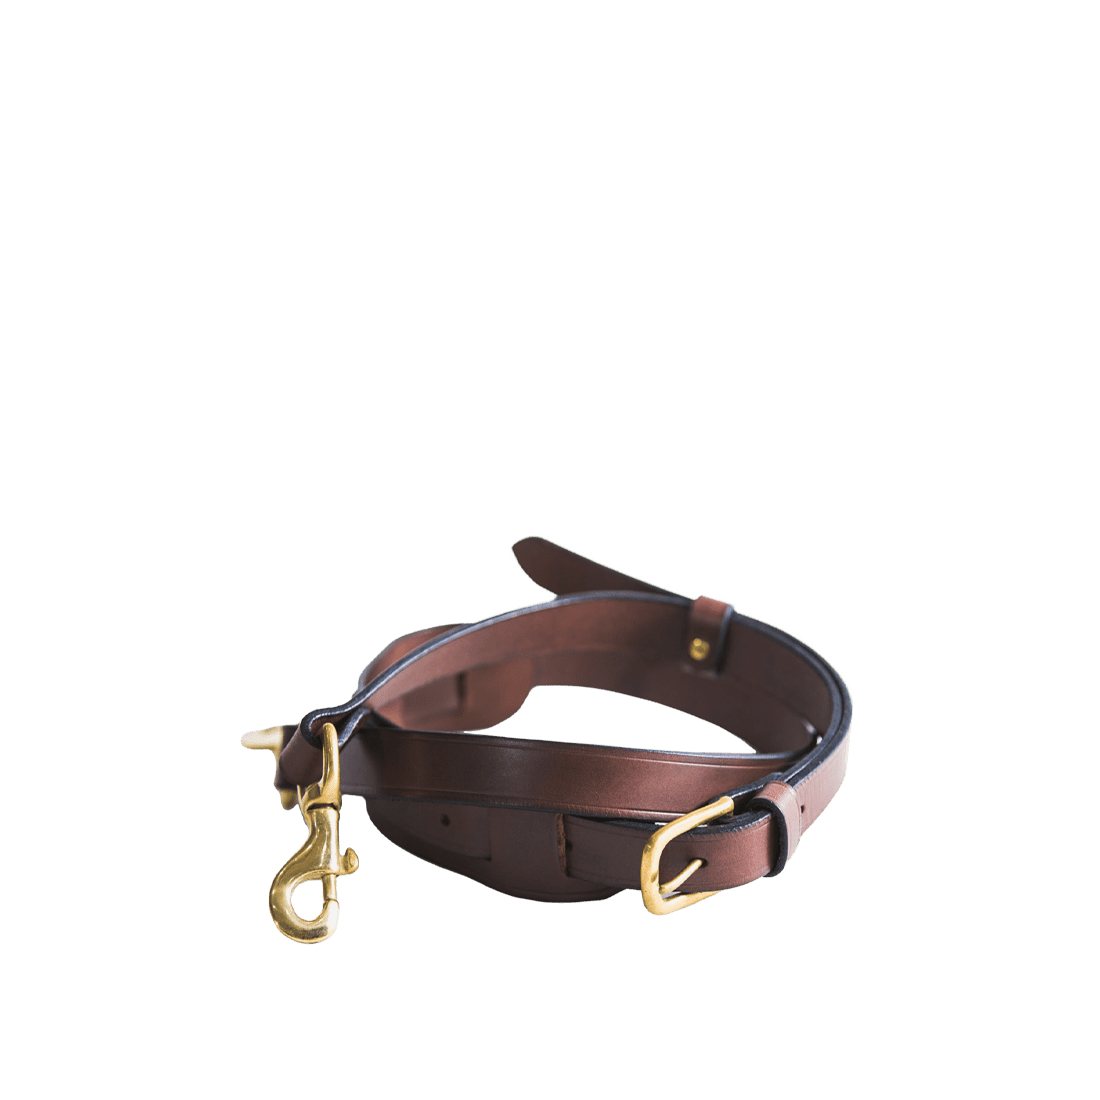 Leather & webbing strap in Italian saddle hide chestnut colour, handmade by Mackenzie Leather Edinburgh.